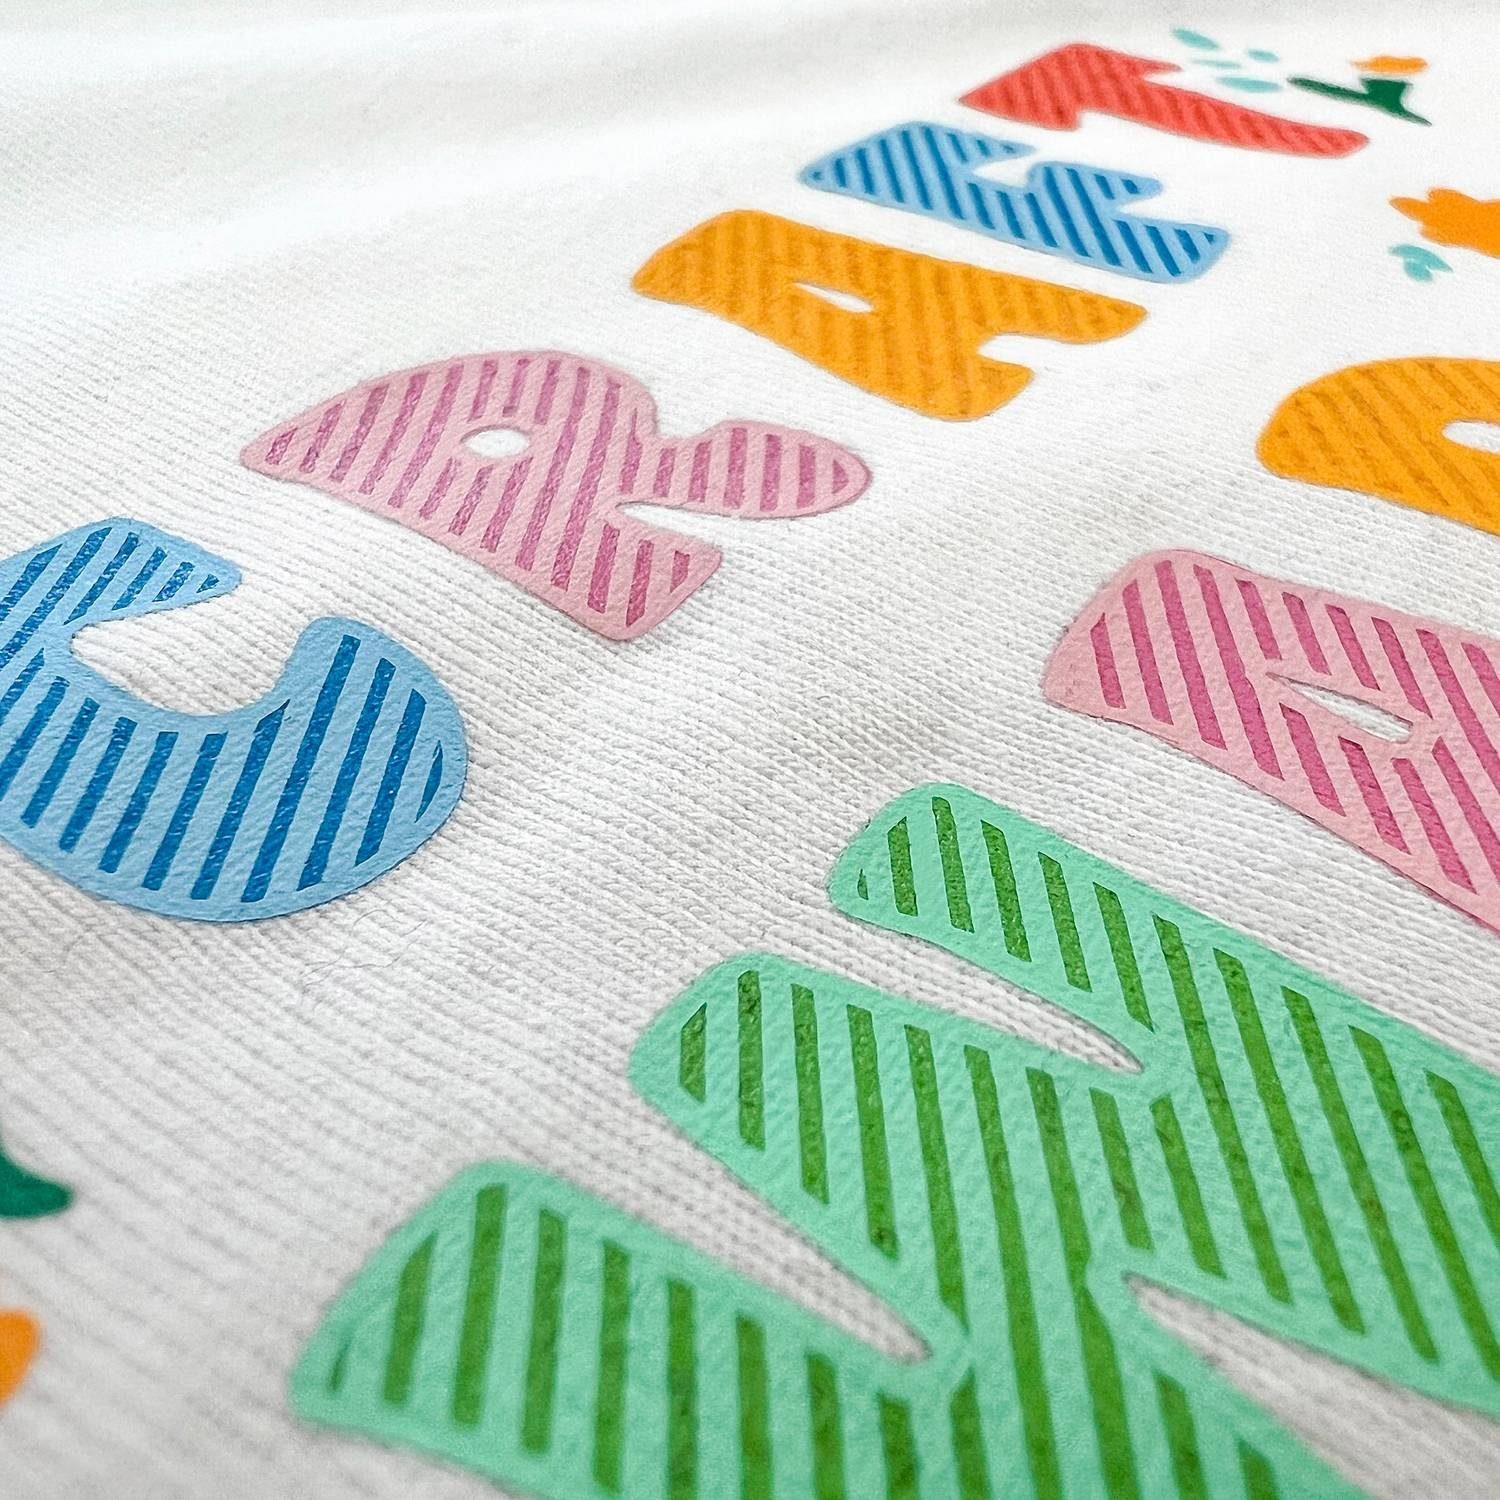 A4 Textilien auf Girly Hilltop Transparentpapier 11 Aufbügeln Transferfolie, x zum Love Textilfolie